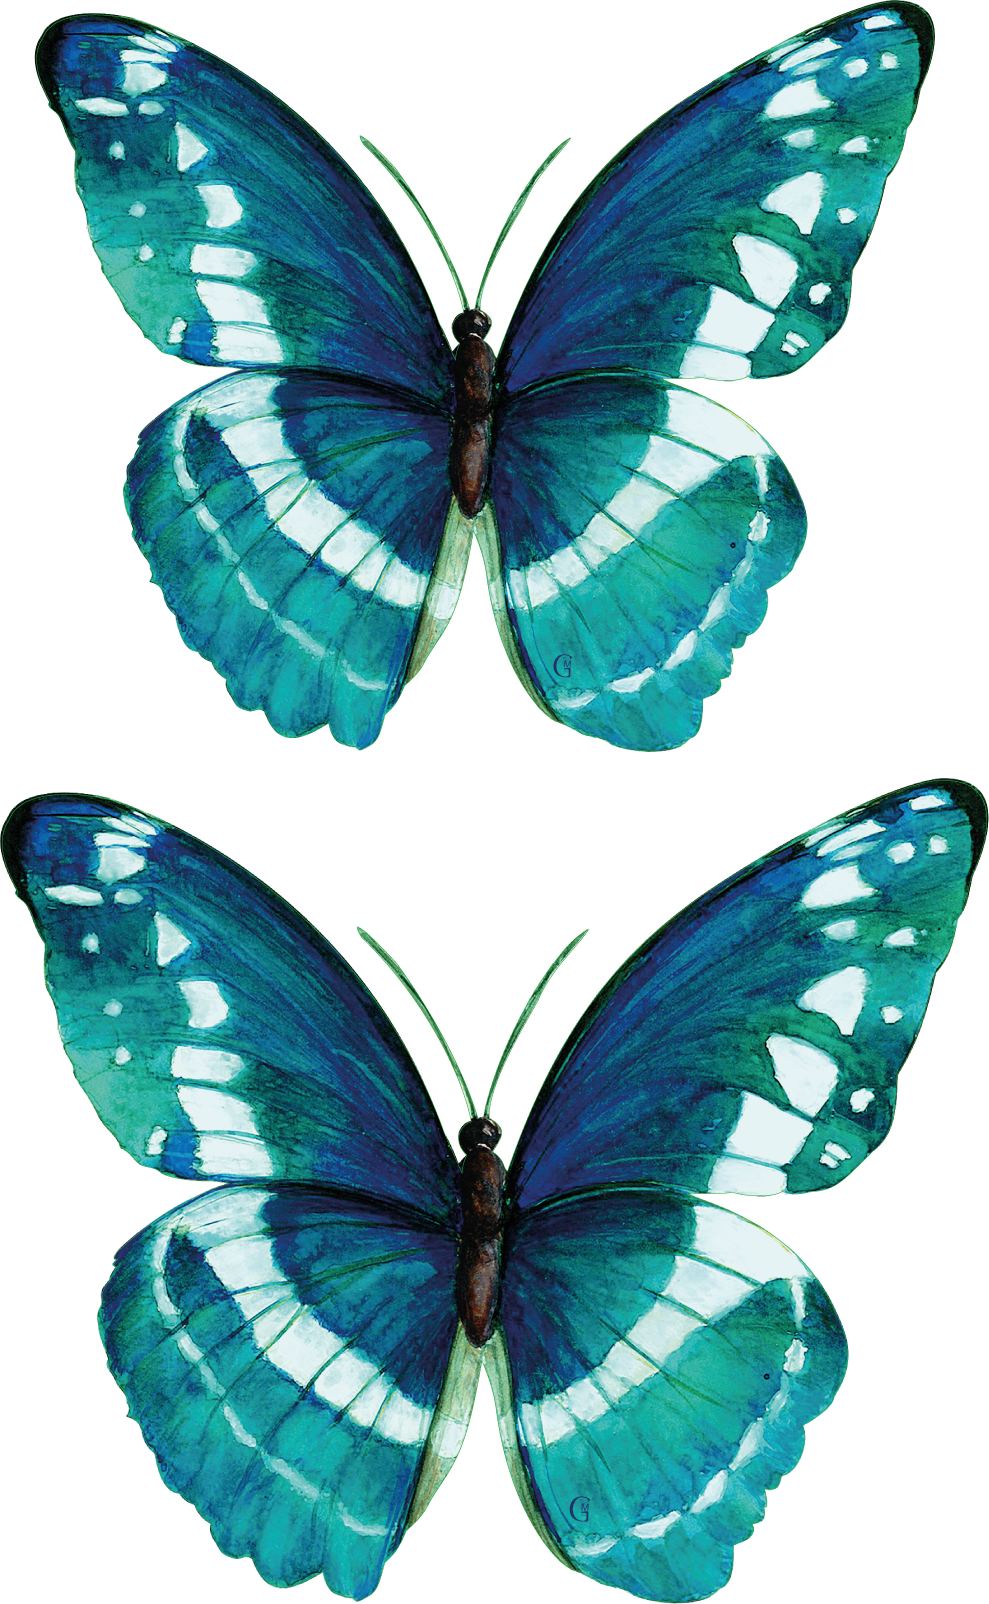 2 papillons bleus verts